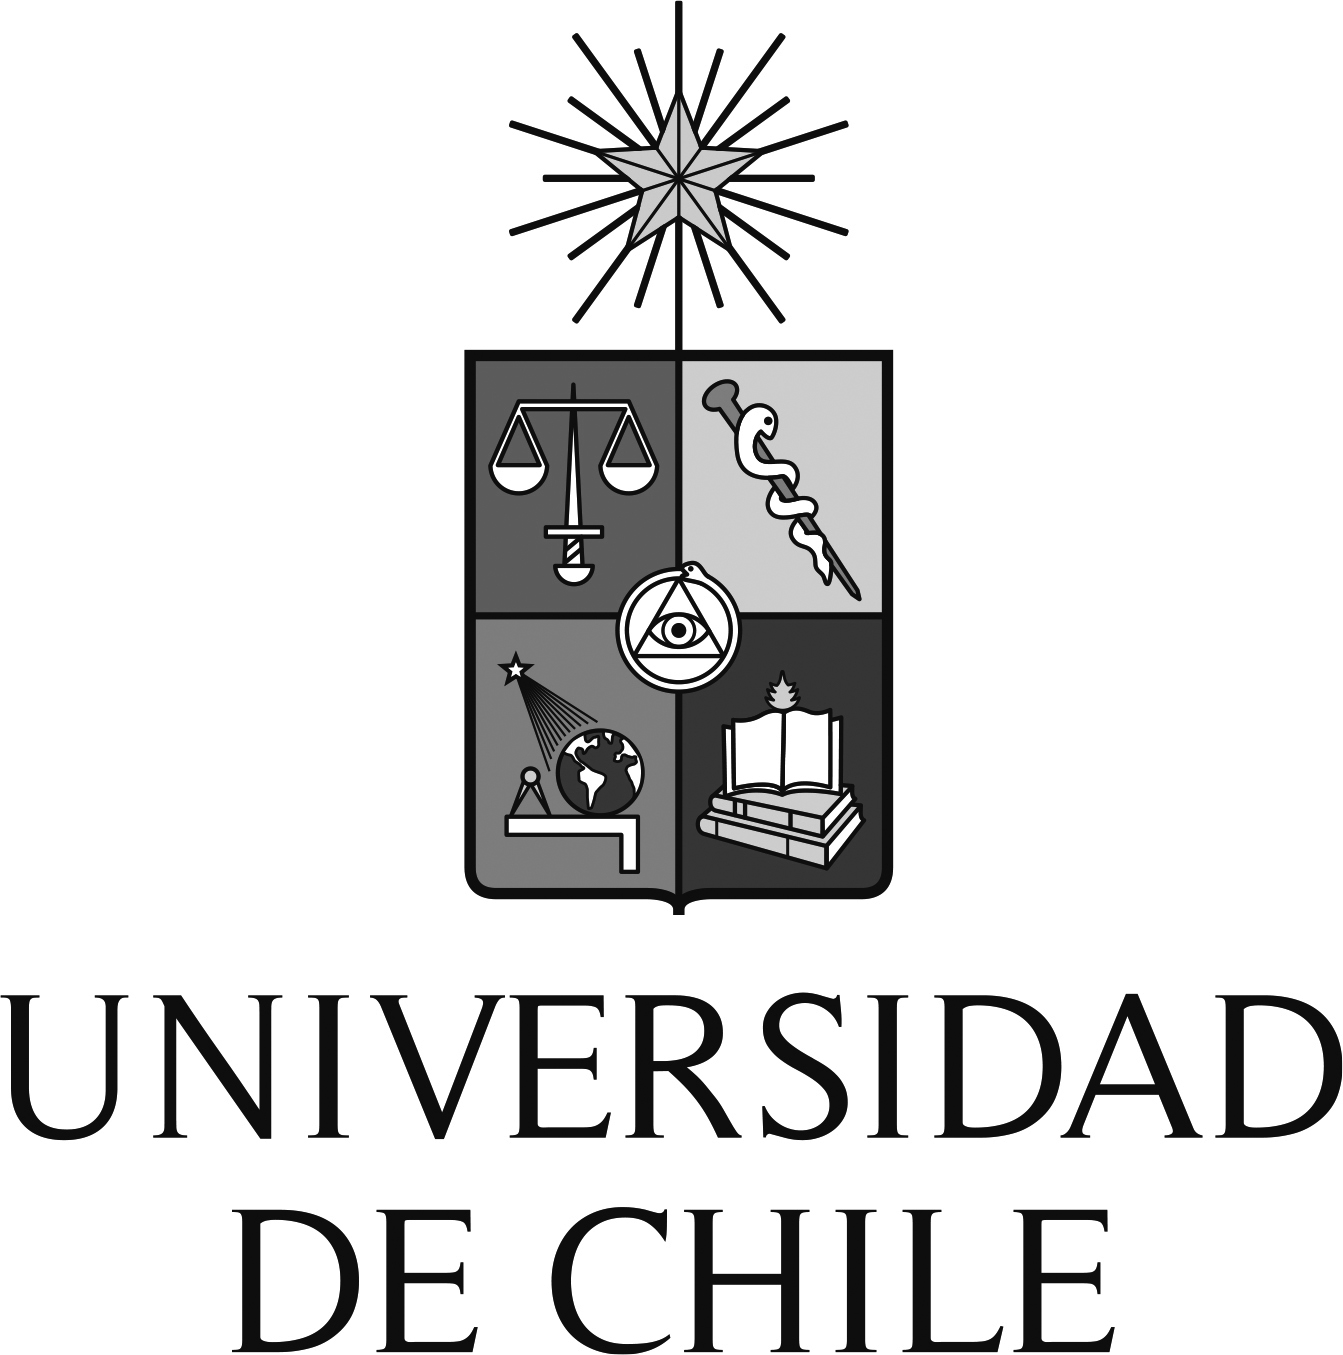 Escudo Universidad de Chile vertical escala de grises